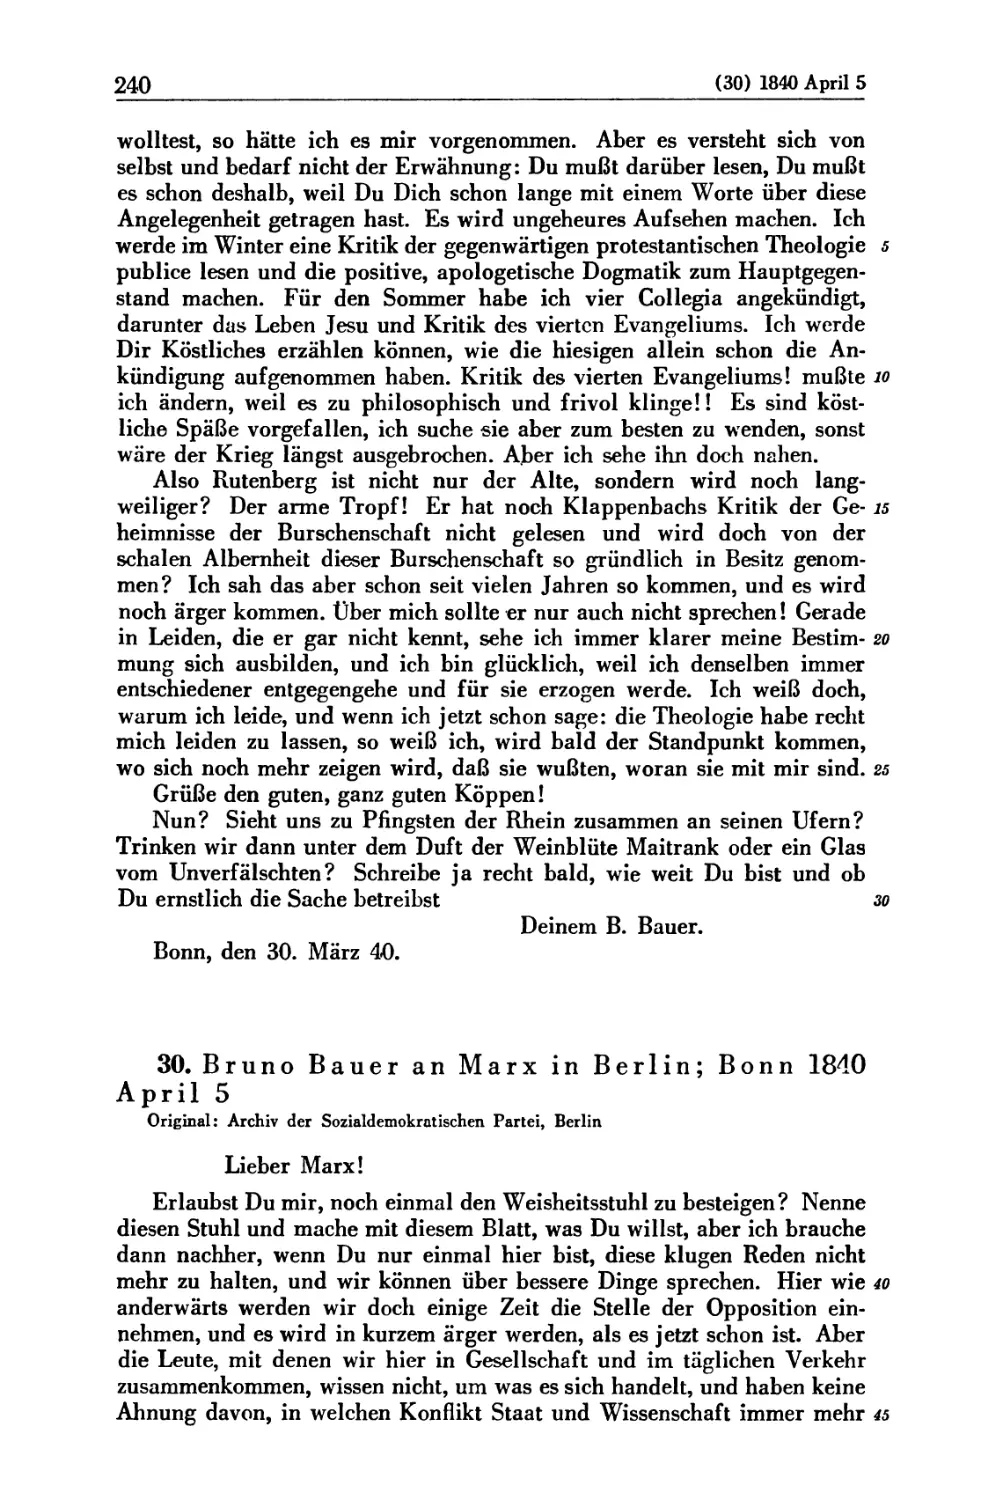 30. Bruno Bauer an Marx in Berlin; Bonn 1840 April 5